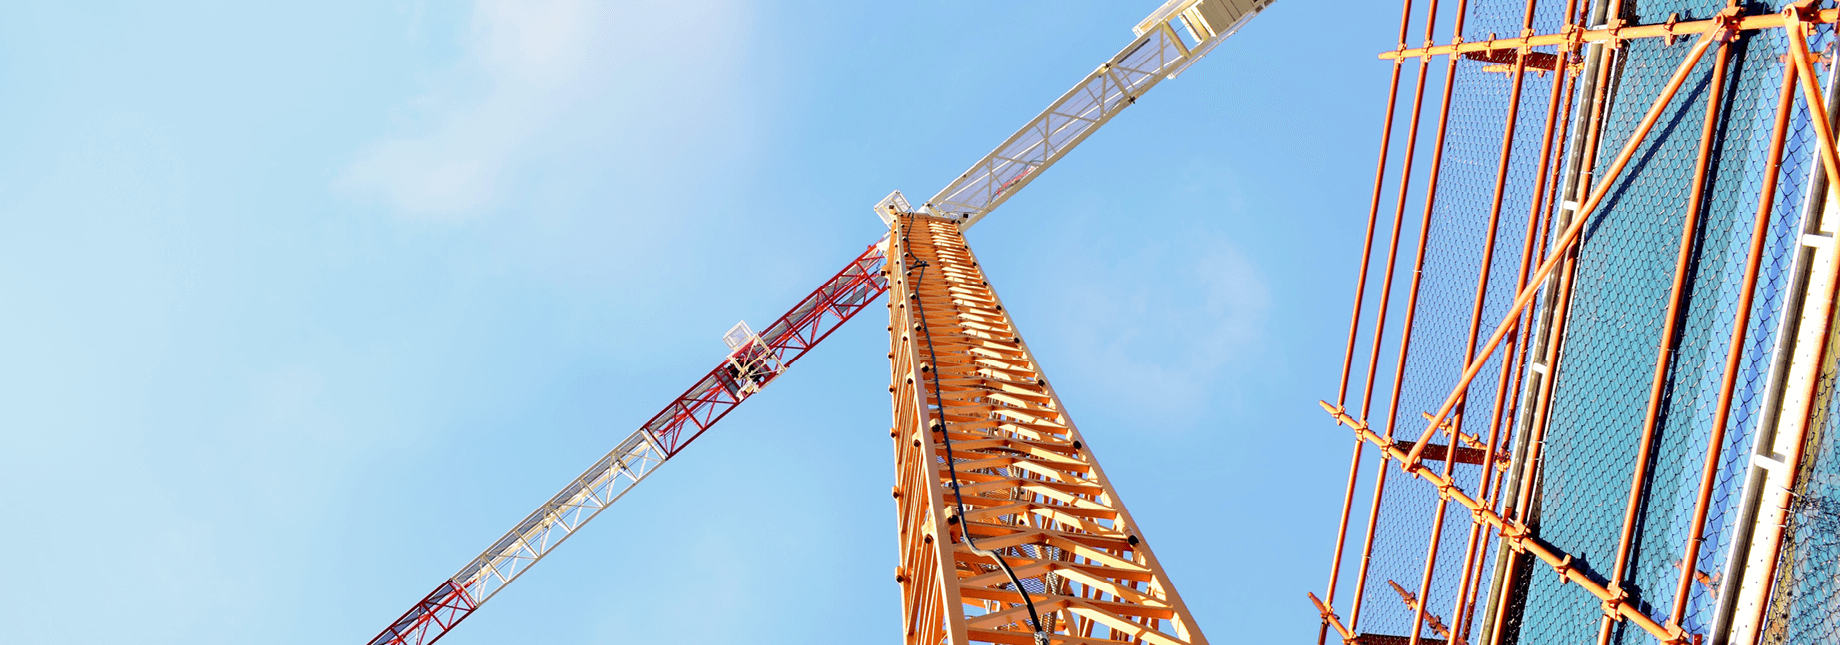 crane machine at construction site